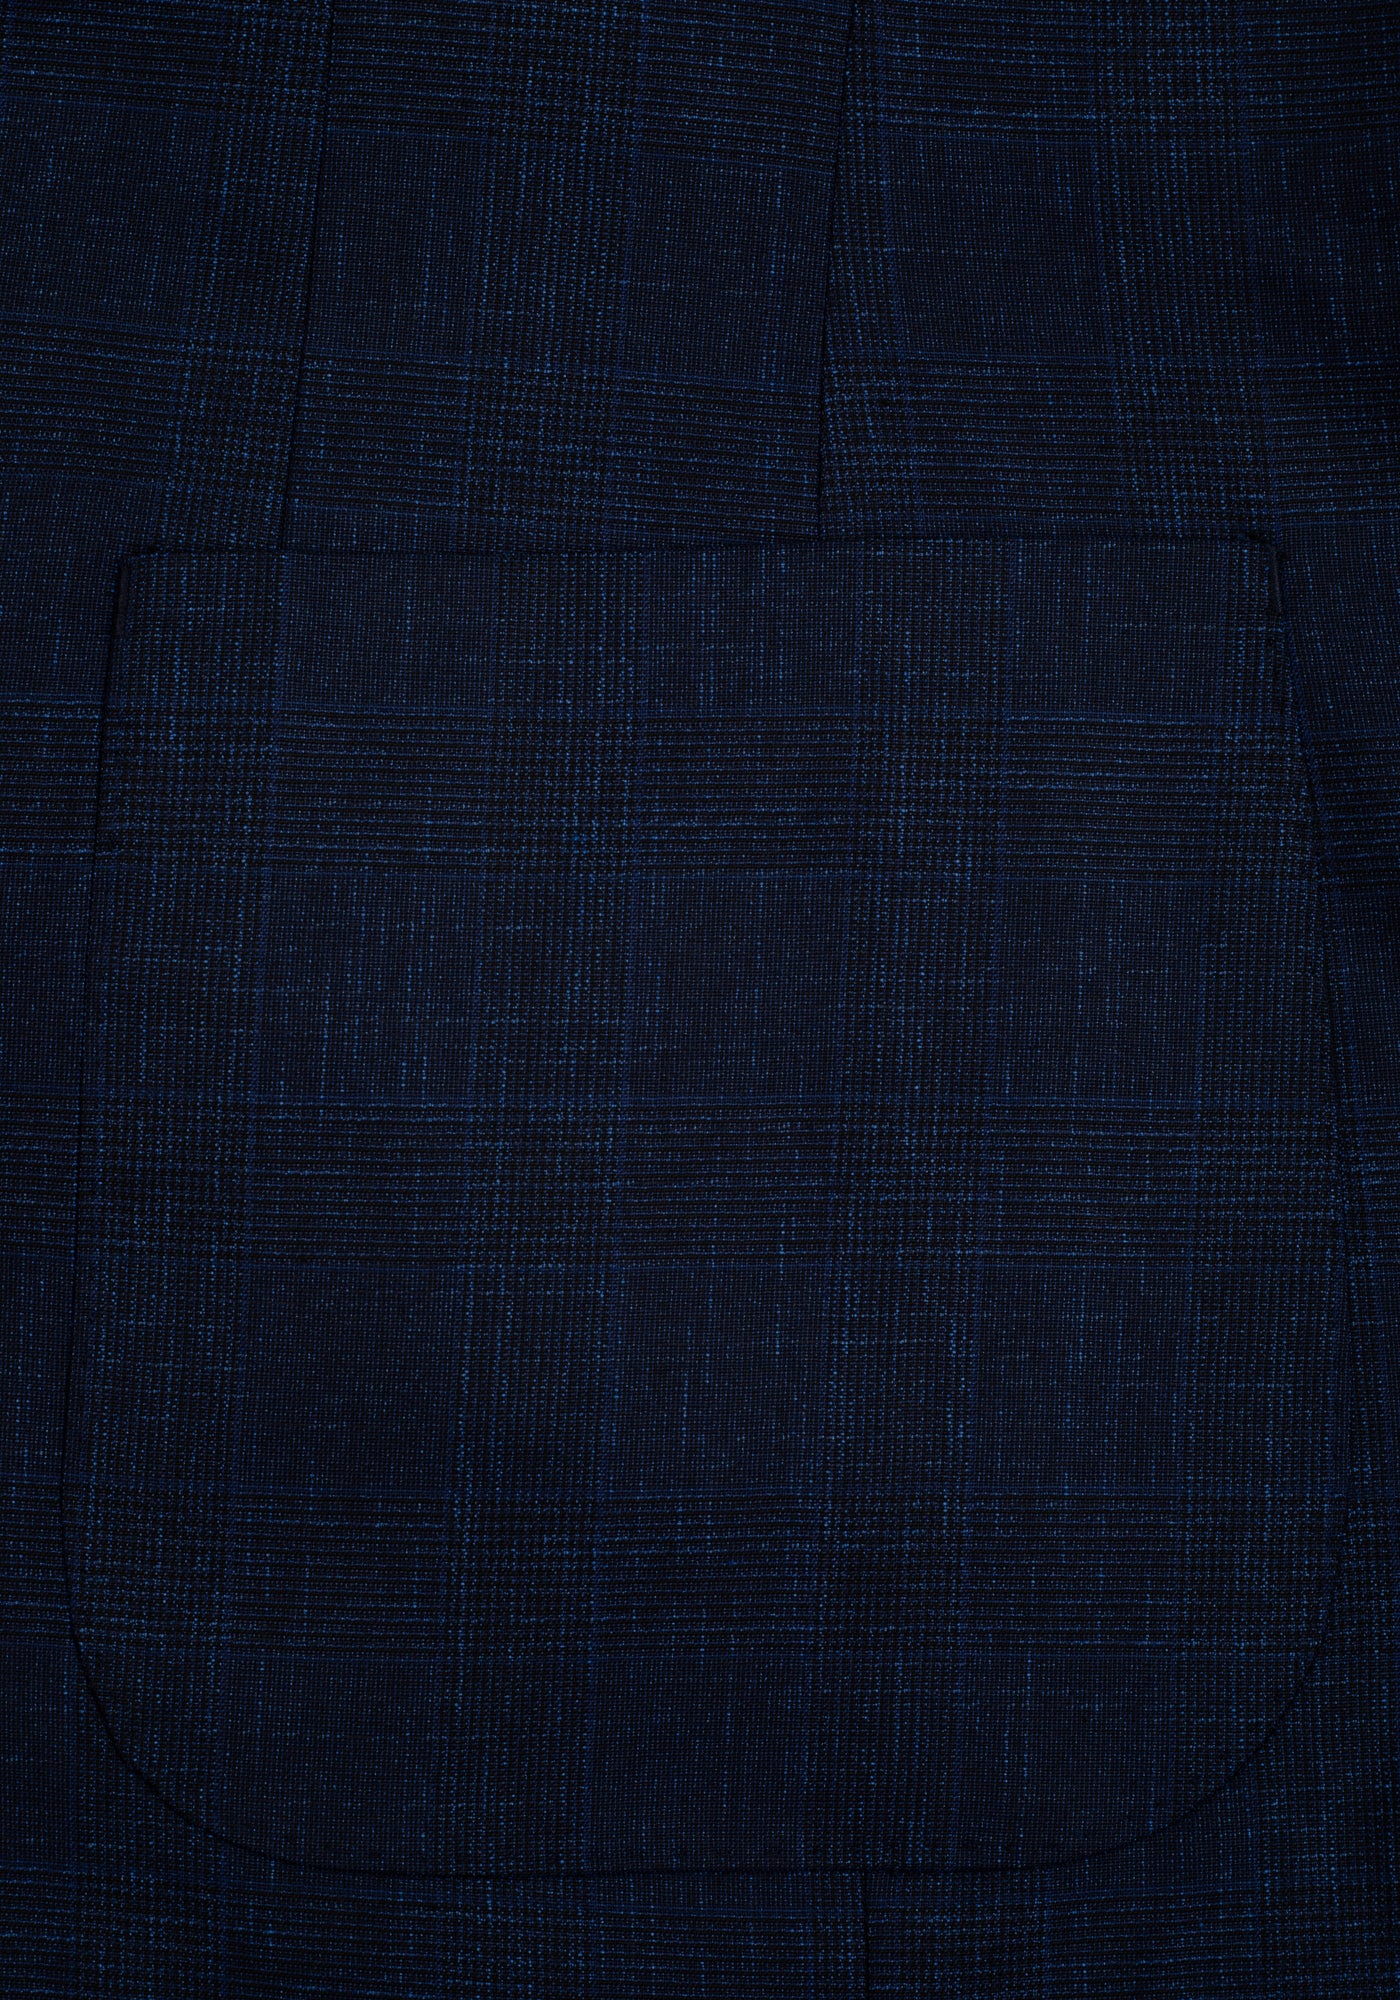 Contemporary Fit Twilight Blue Checked Blazer